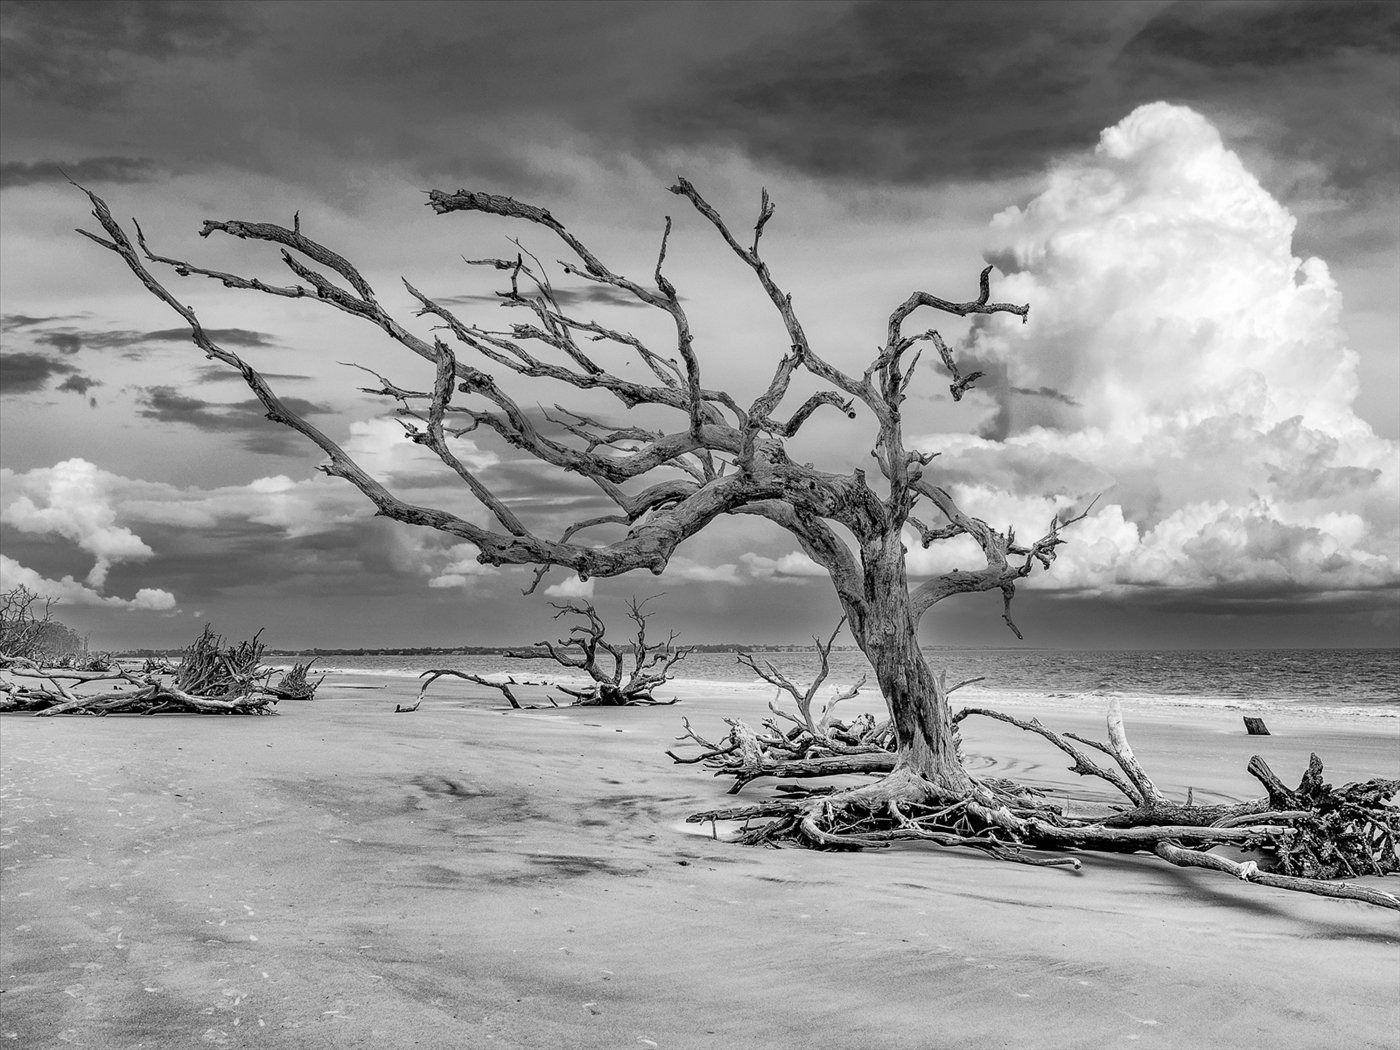 Driftwood Beach, Gene Bachman, Louisiana Photographic Society, 2 HM